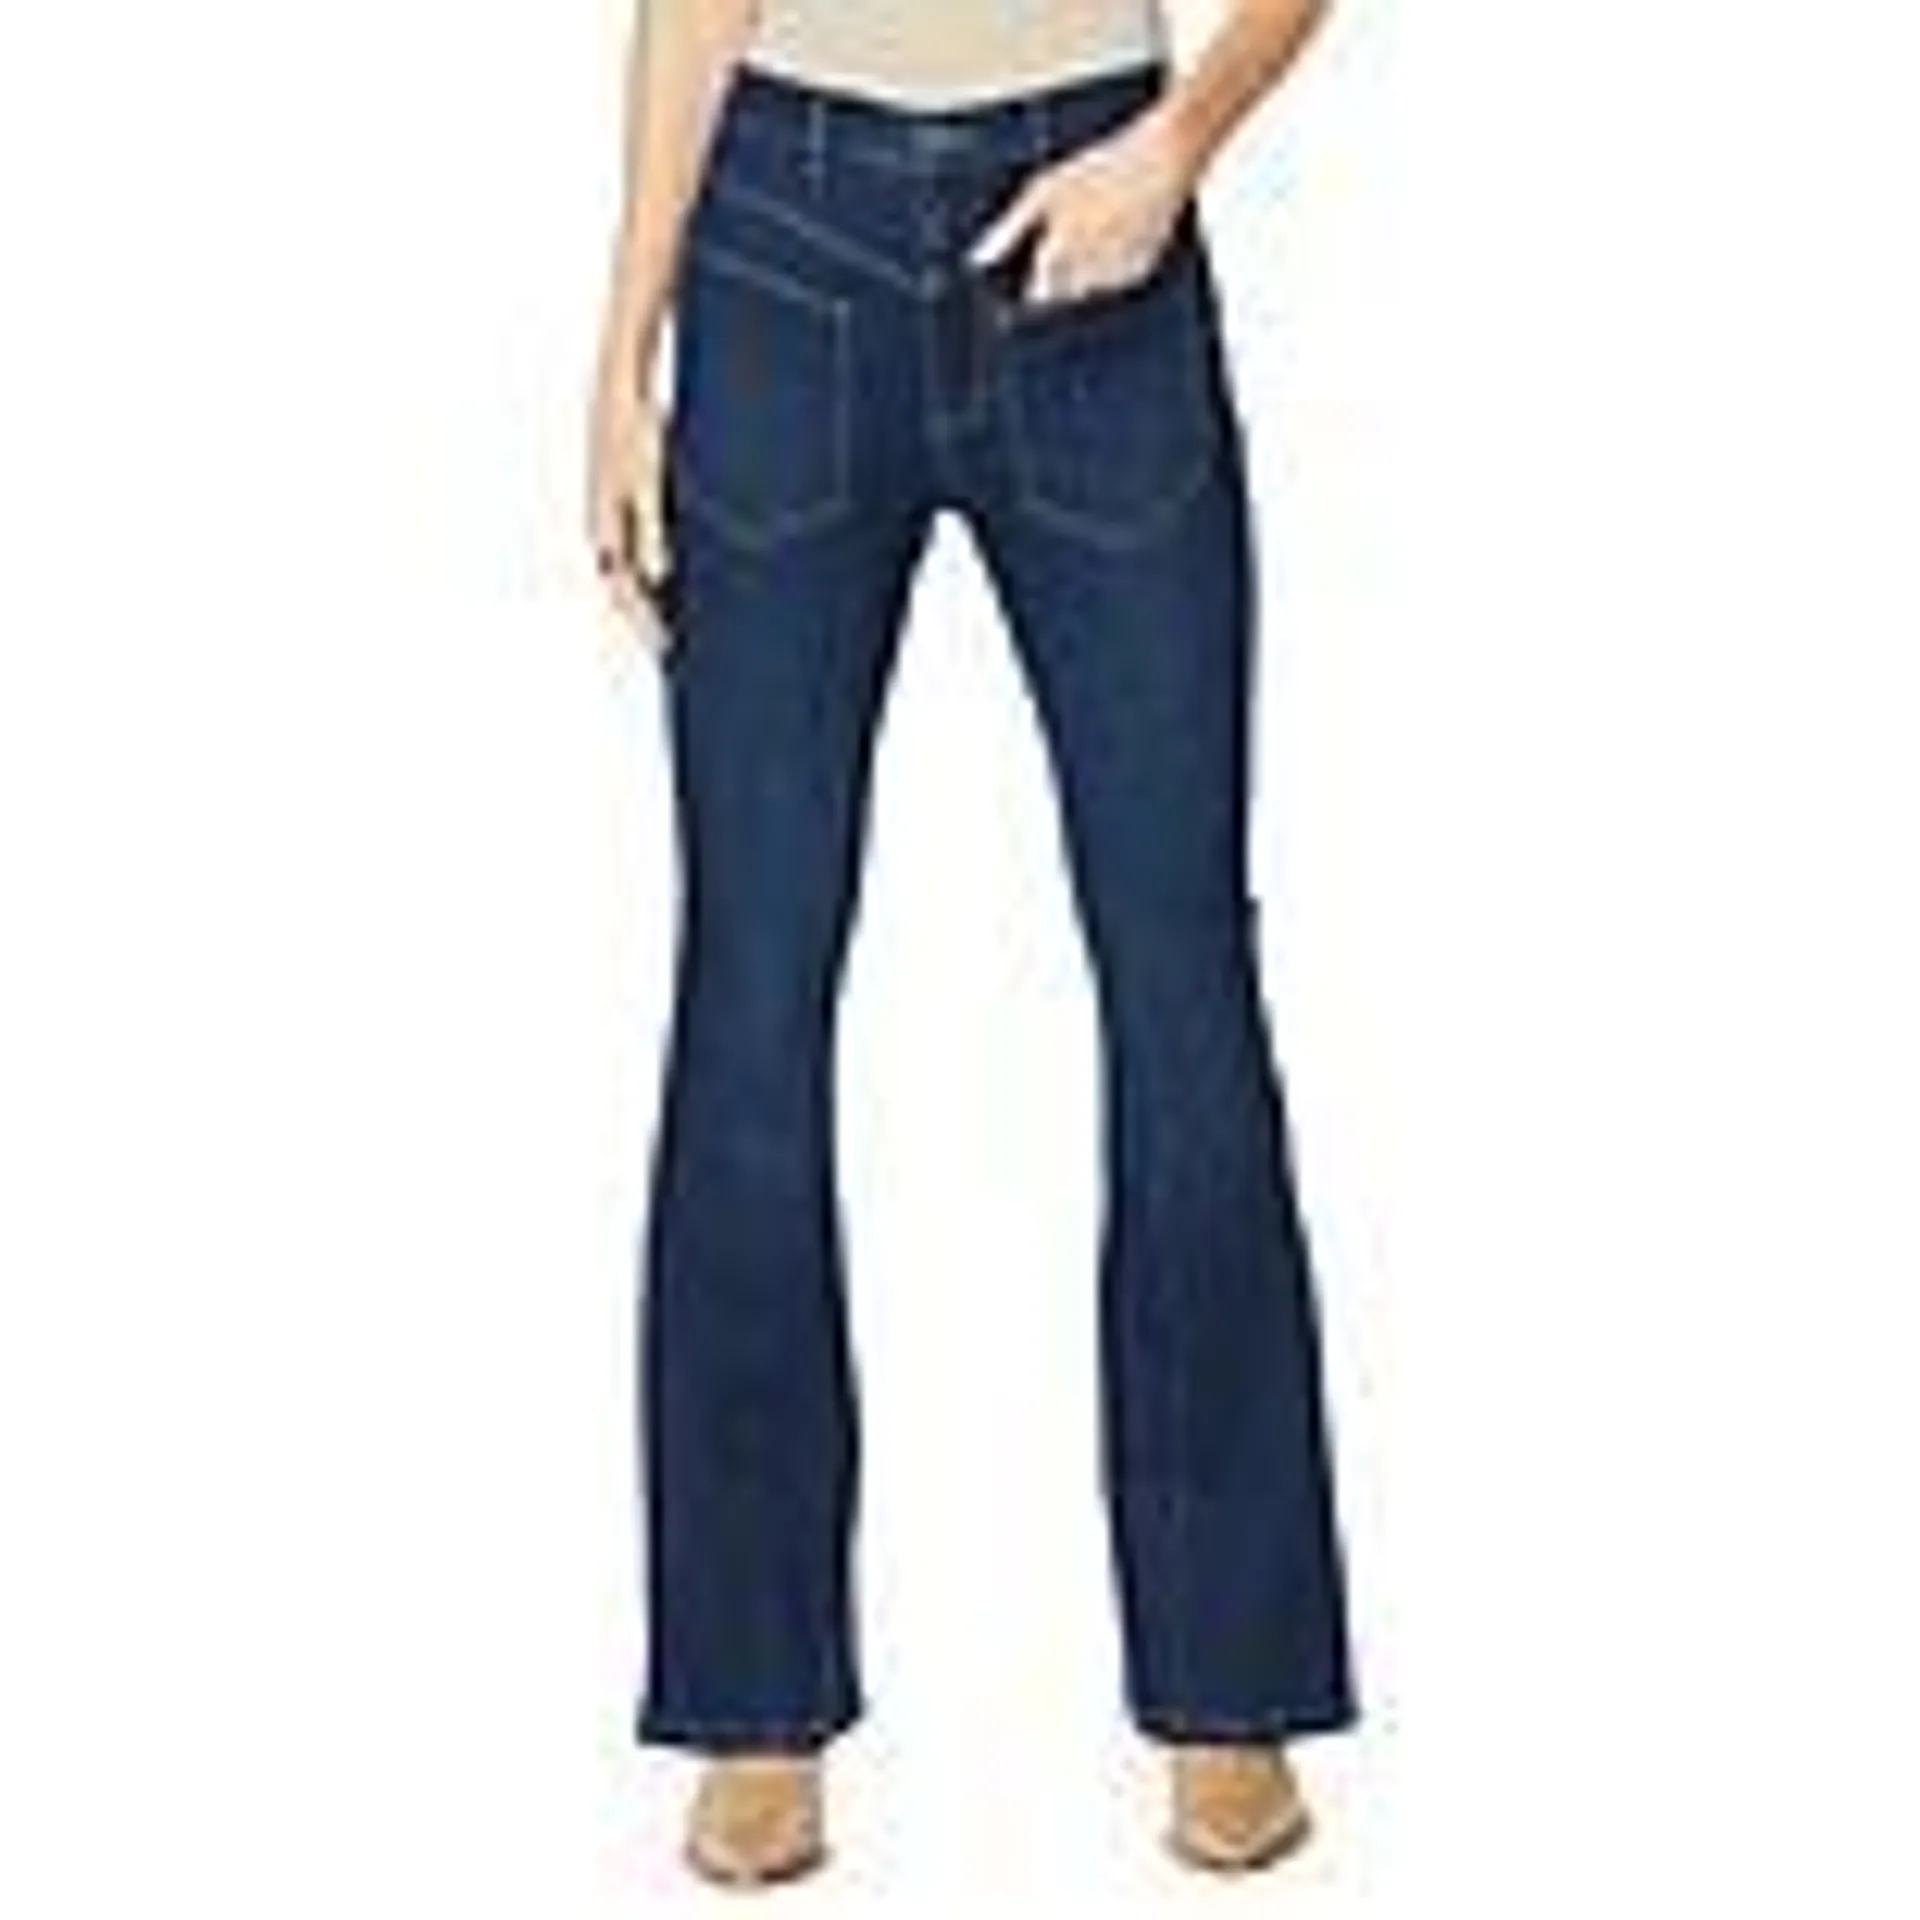 Vanderbilt Jeans Chrissie High-Rise Flare Jean